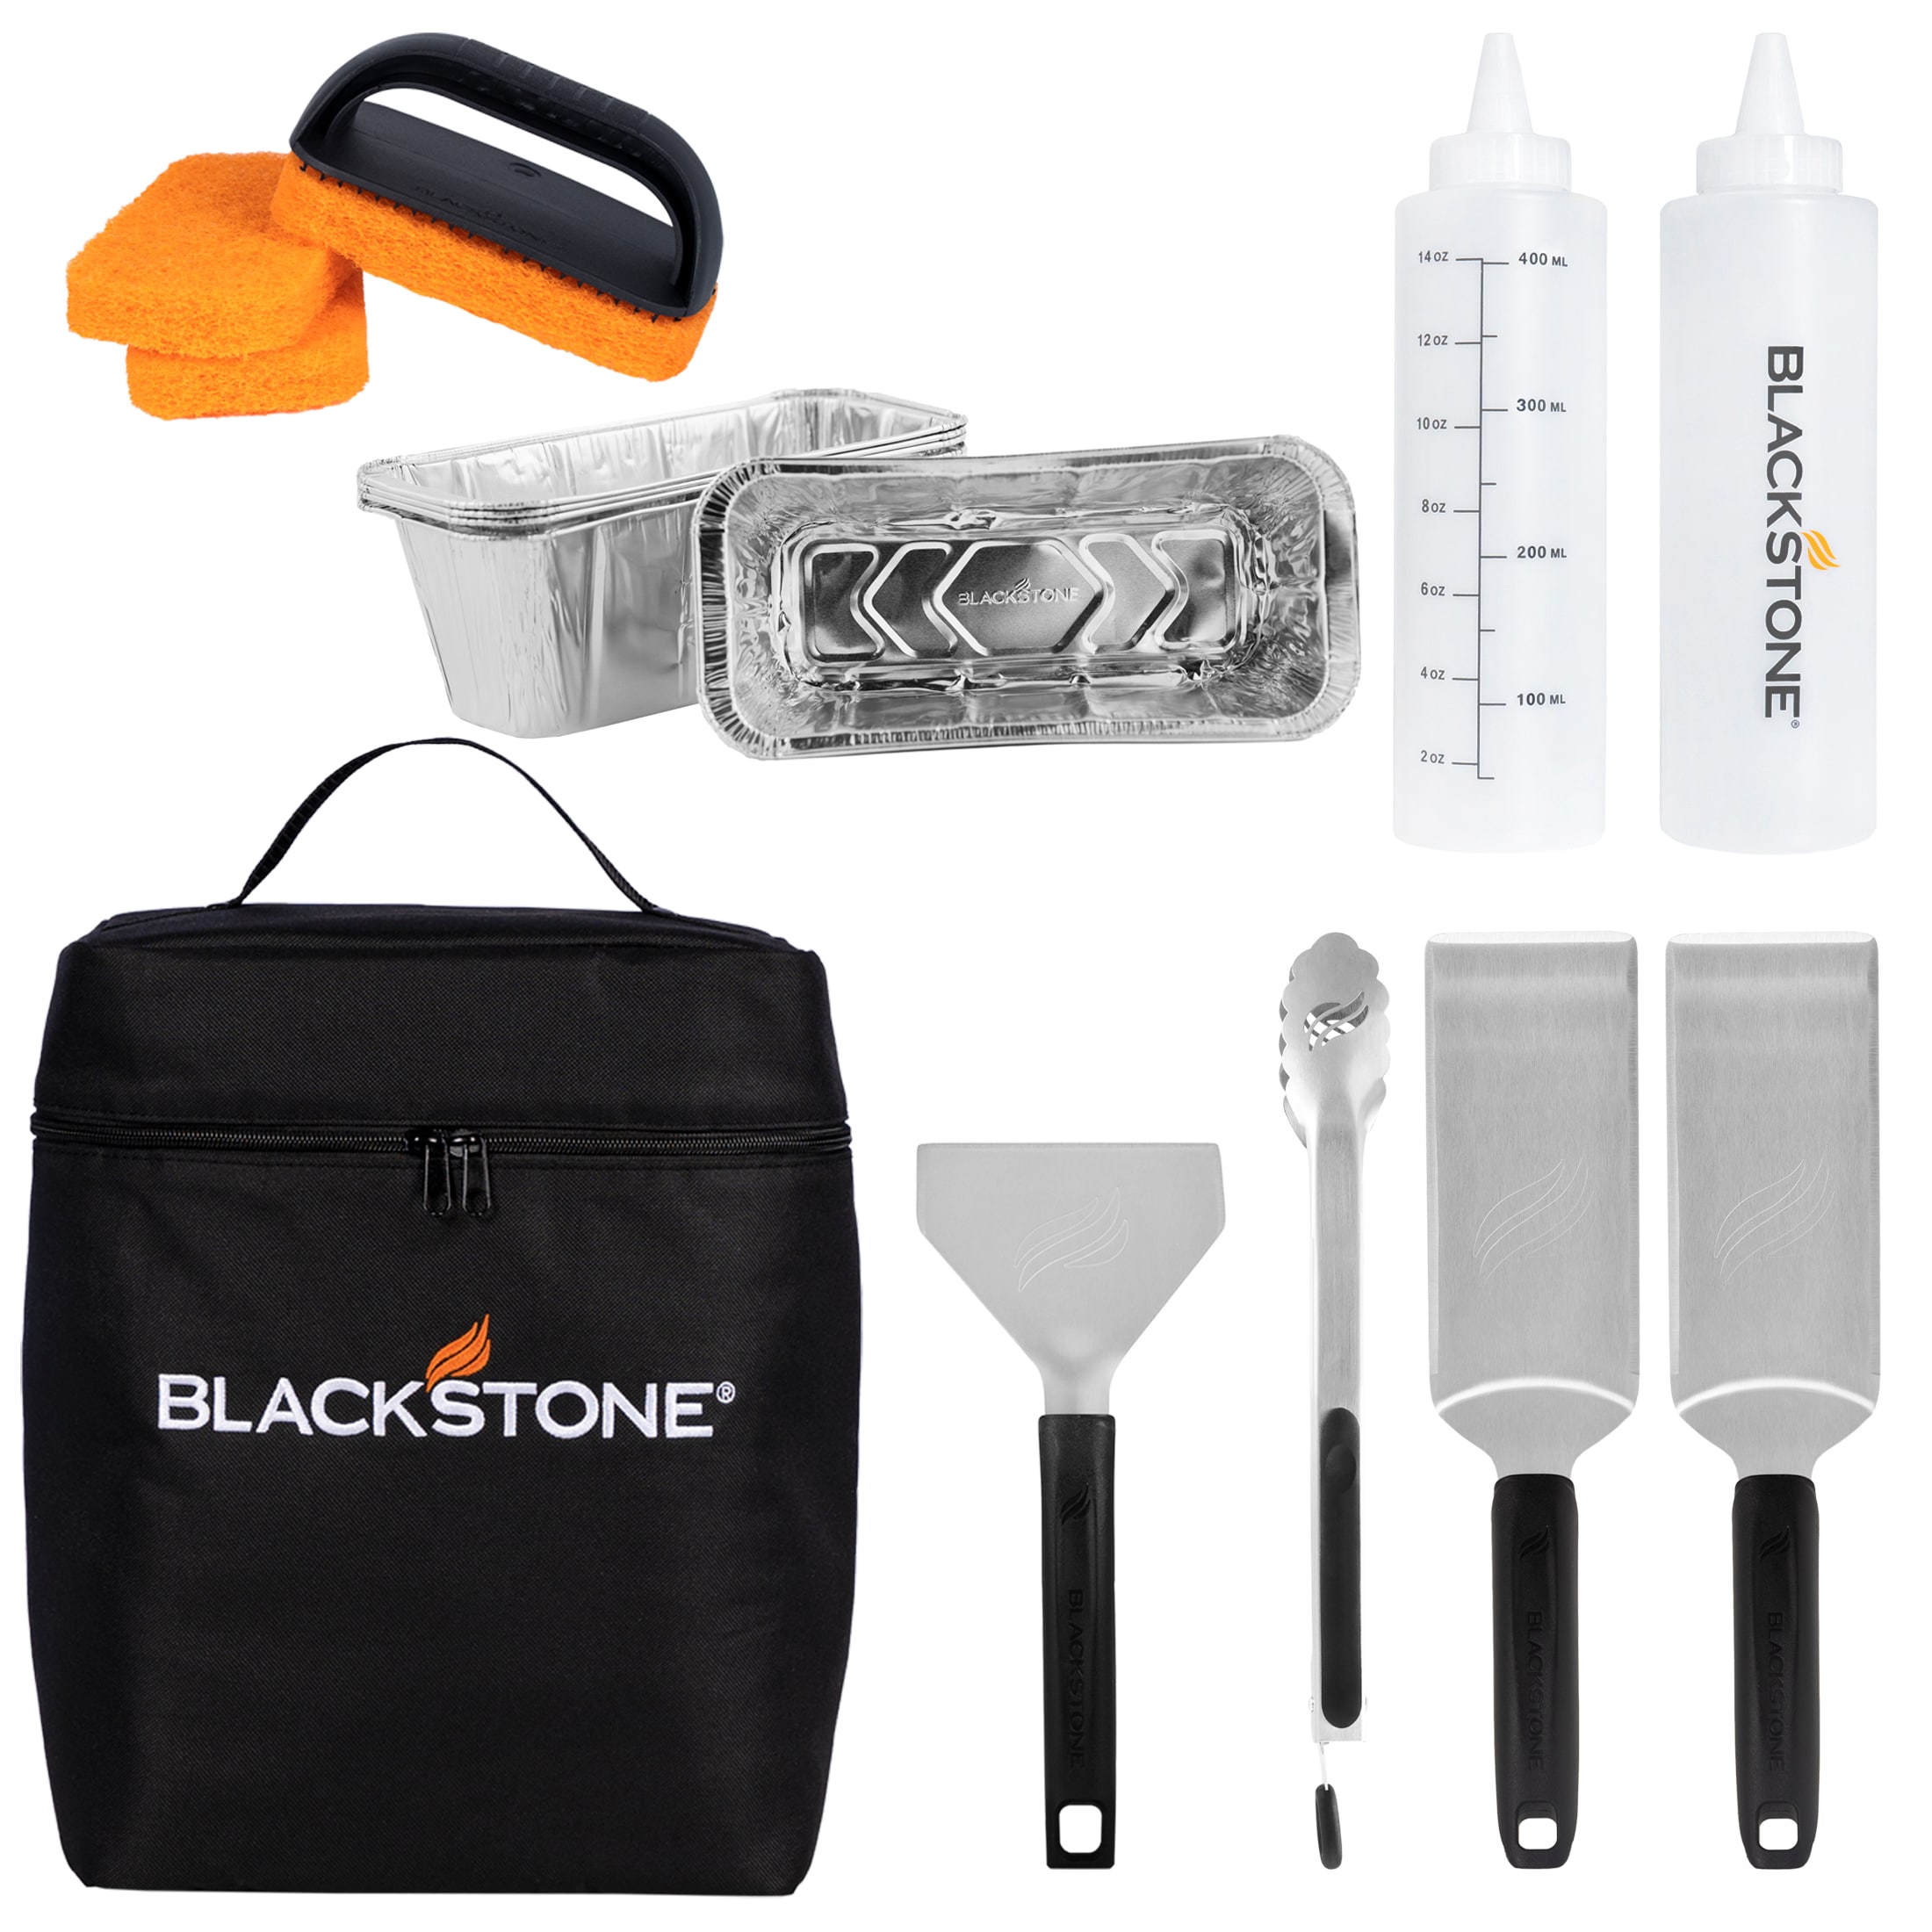 Commercial Chef Blackstone Griddle Accessories Kit - Blackstone